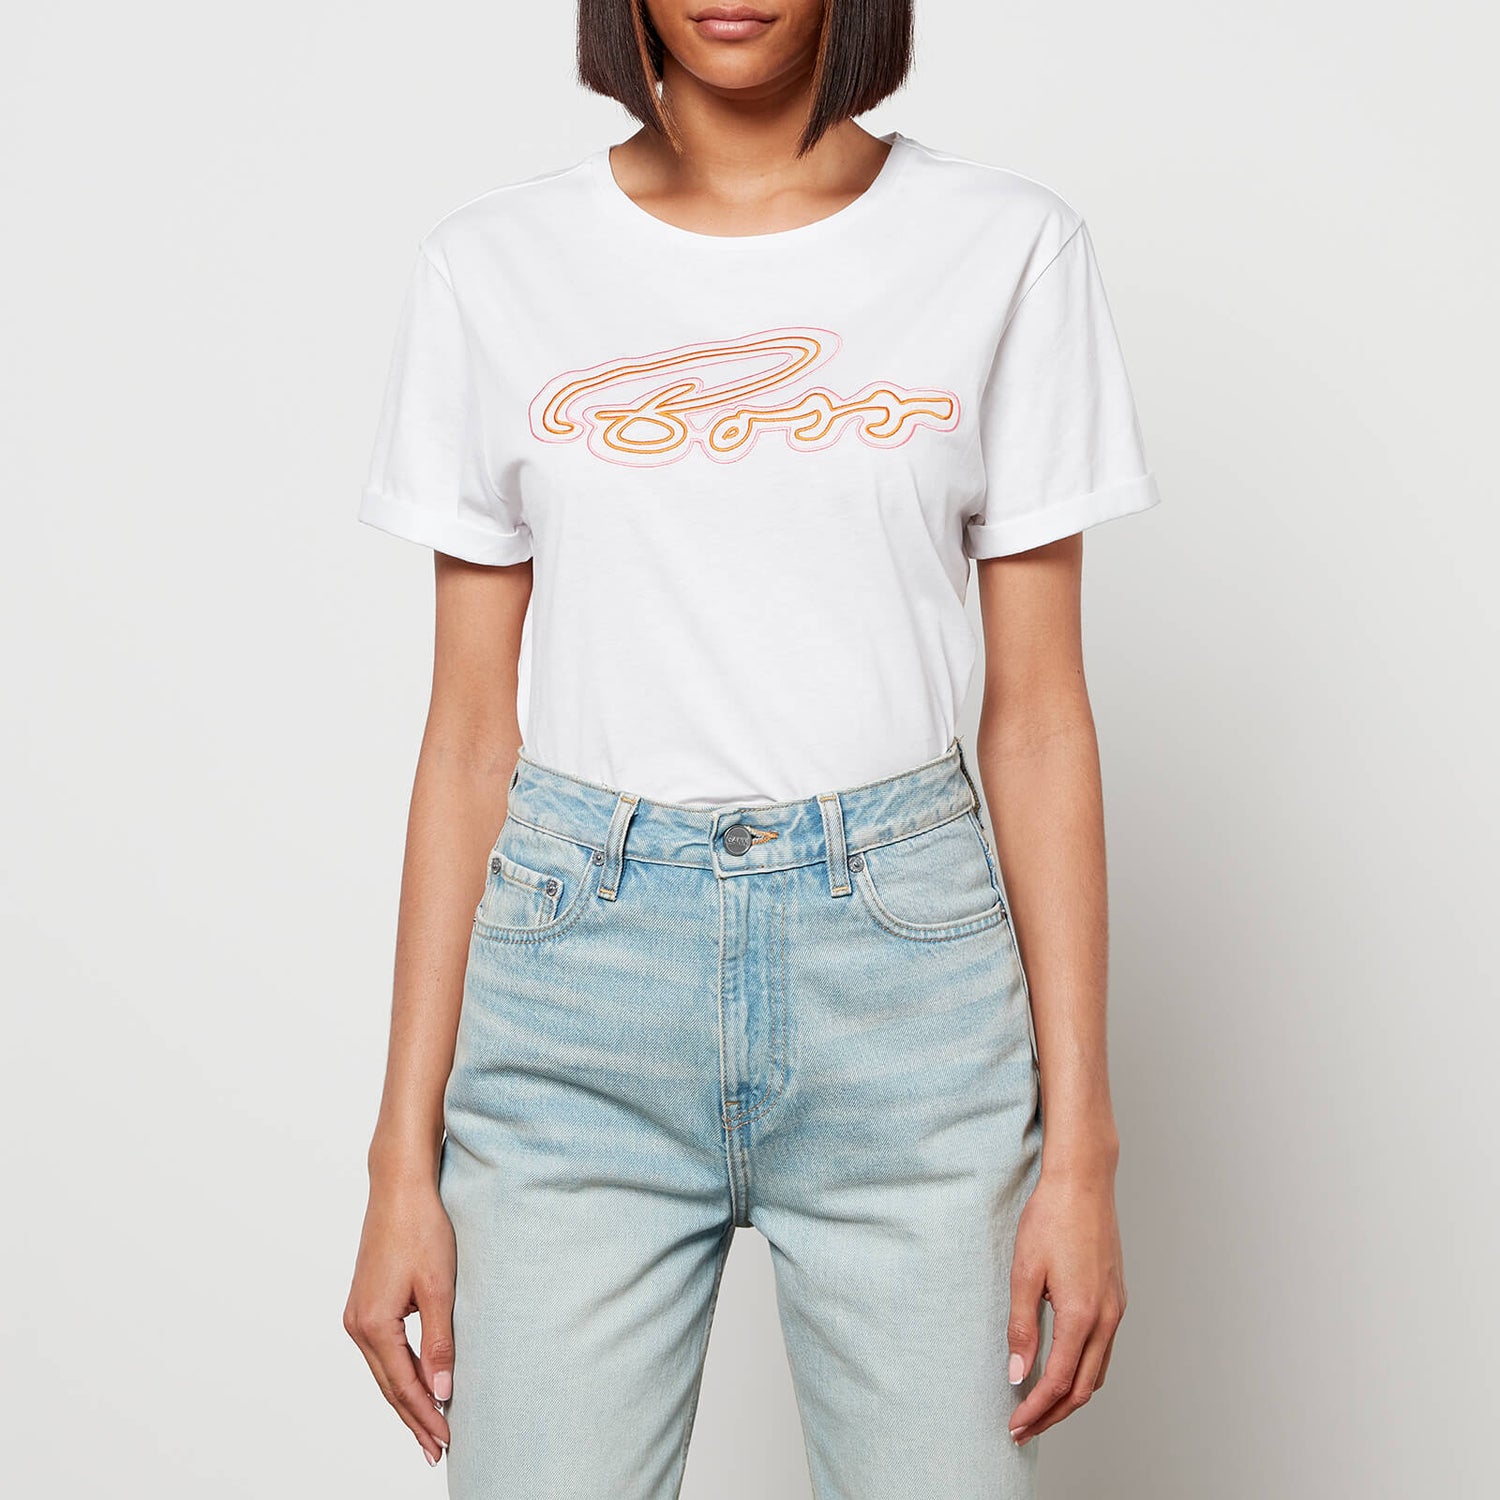 BOSS Women's Esummer T-Shirt - Open White